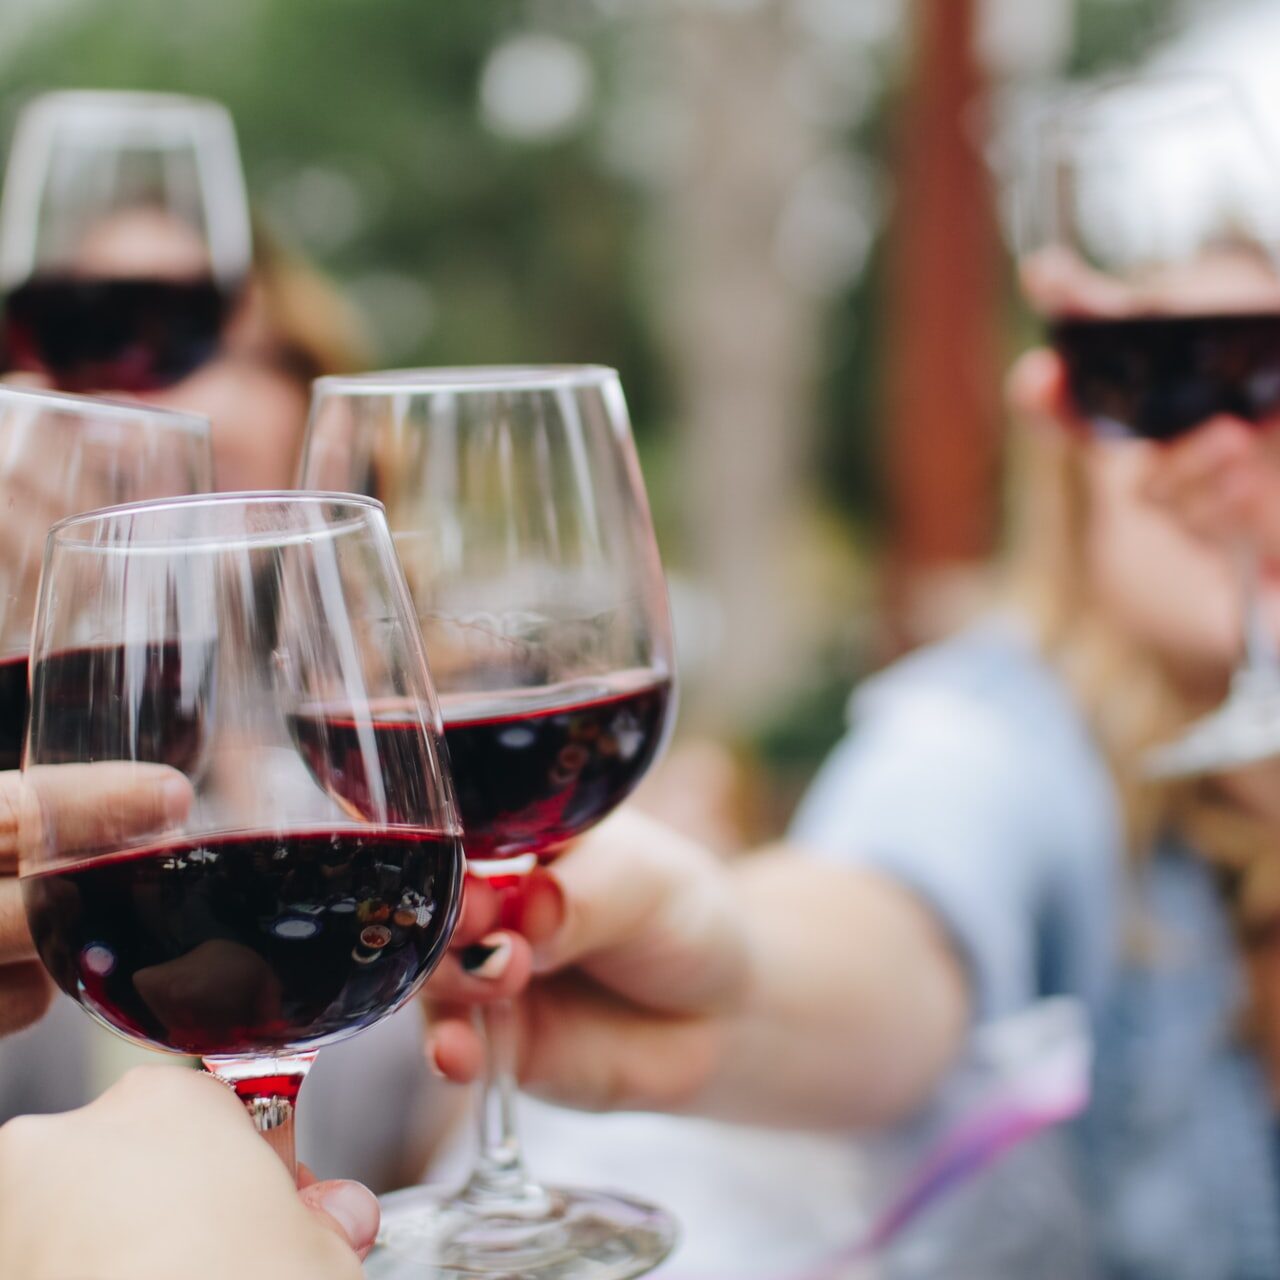 wine glasses toasting and celebrating